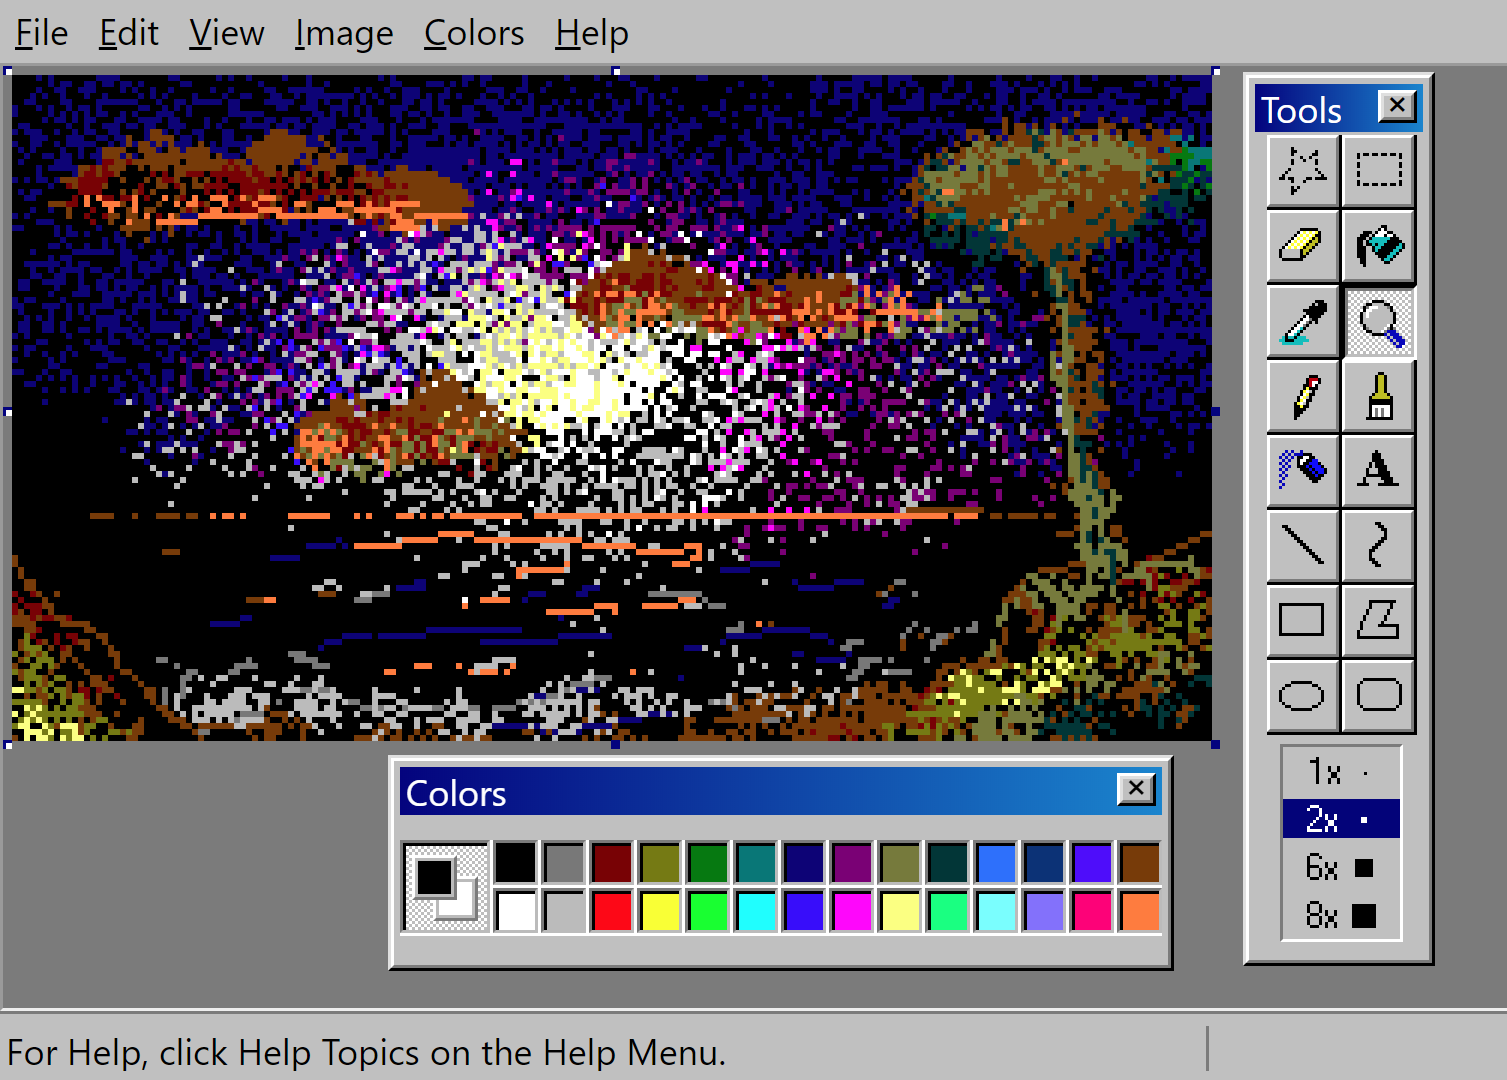 ms paint emulator mac